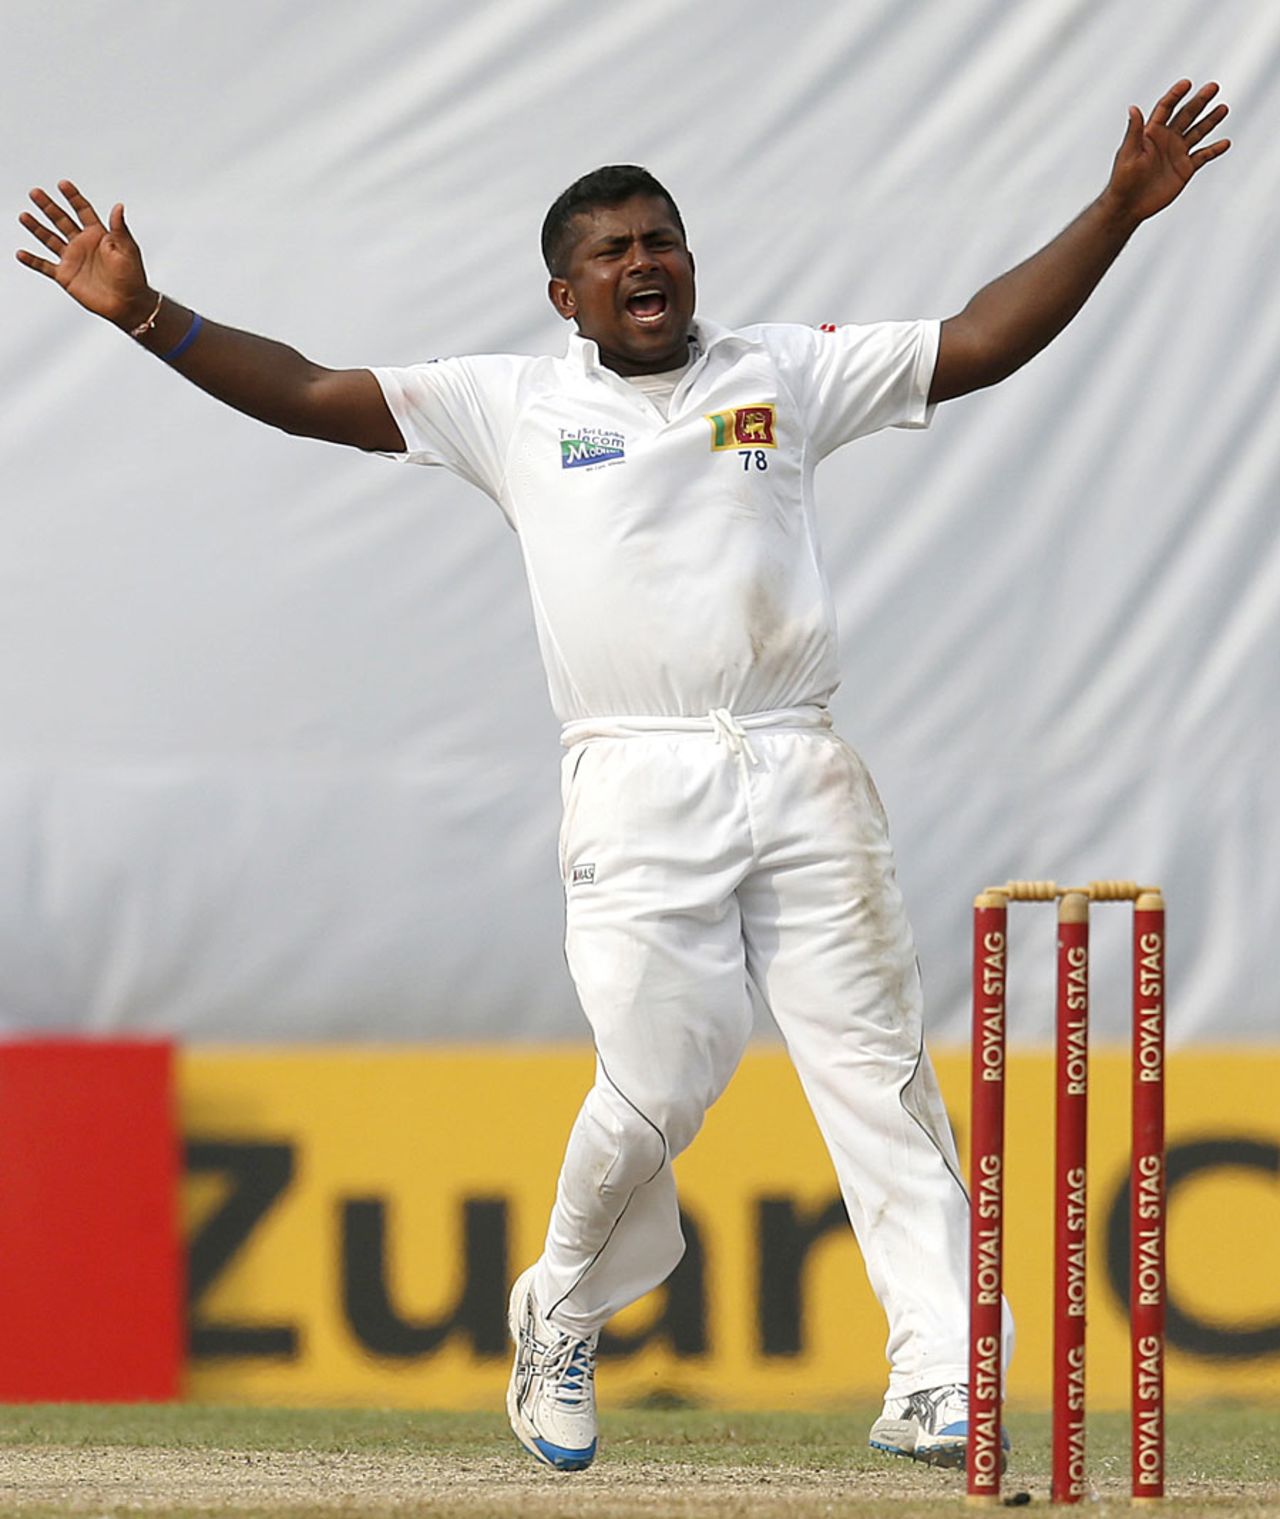 Rangana Herath appeals for a wicket, Sri Lanka v New Zealand, 2nd Test, Colombo, 2nd day, November 26, 2012